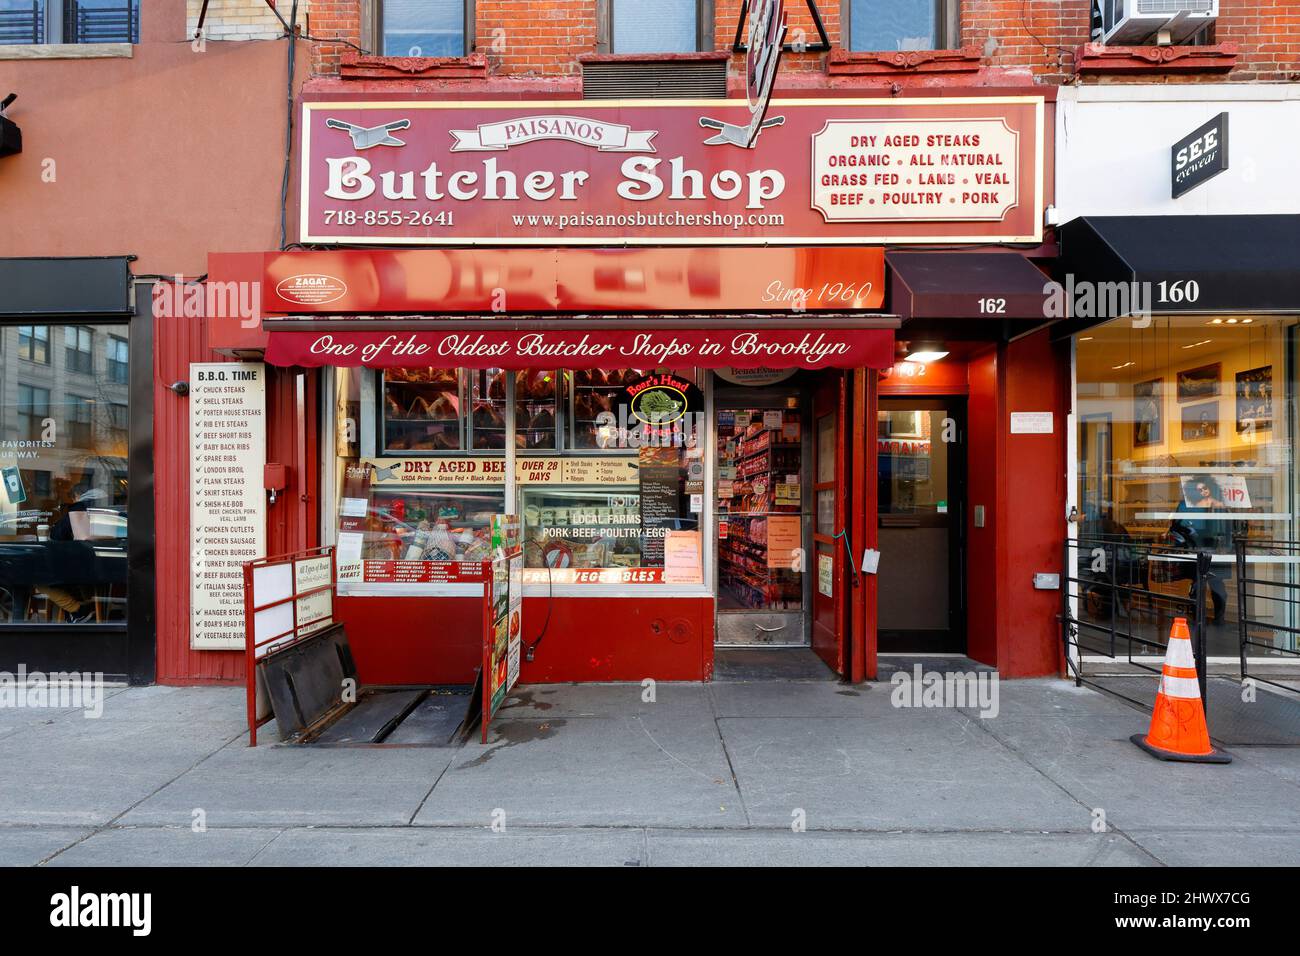 Paisanos Butcher Shop, 162 Smith Street, Brooklyn, NY. exterior storefront of a butcher shop in Cobble Hill, Carroll Gardens neighborhood. Stock Photo